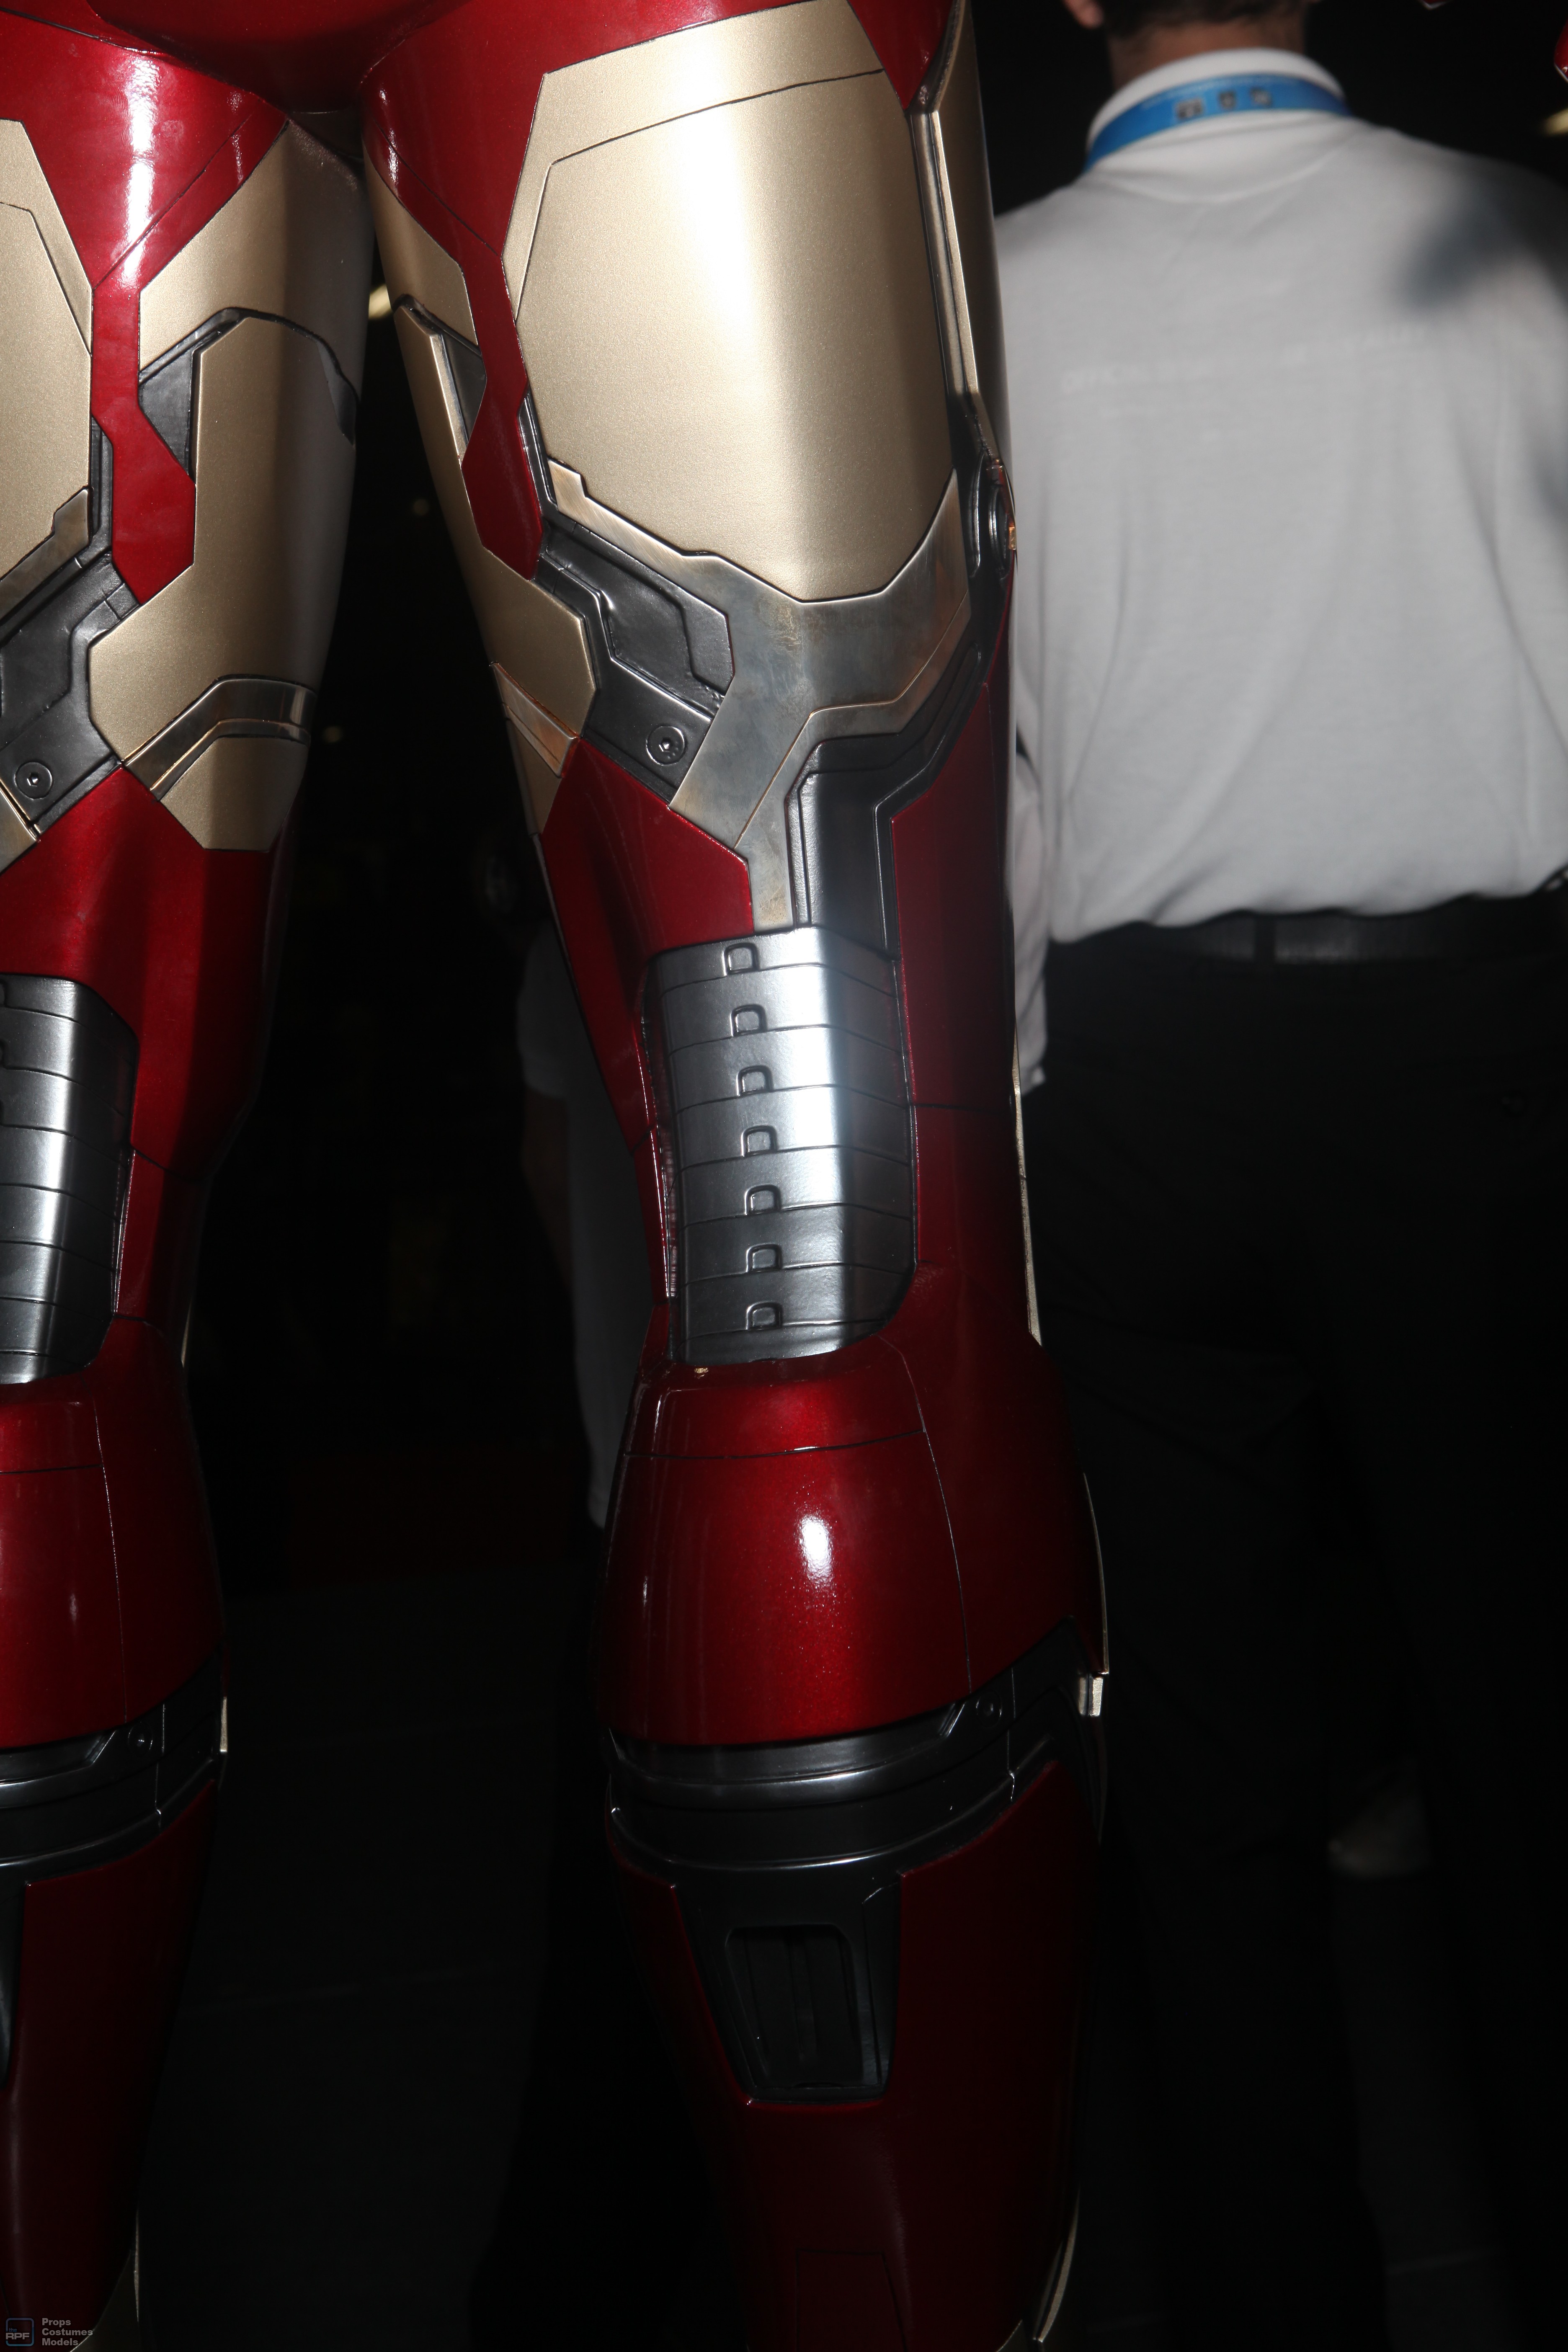 Iron Man Mark 42 Costume